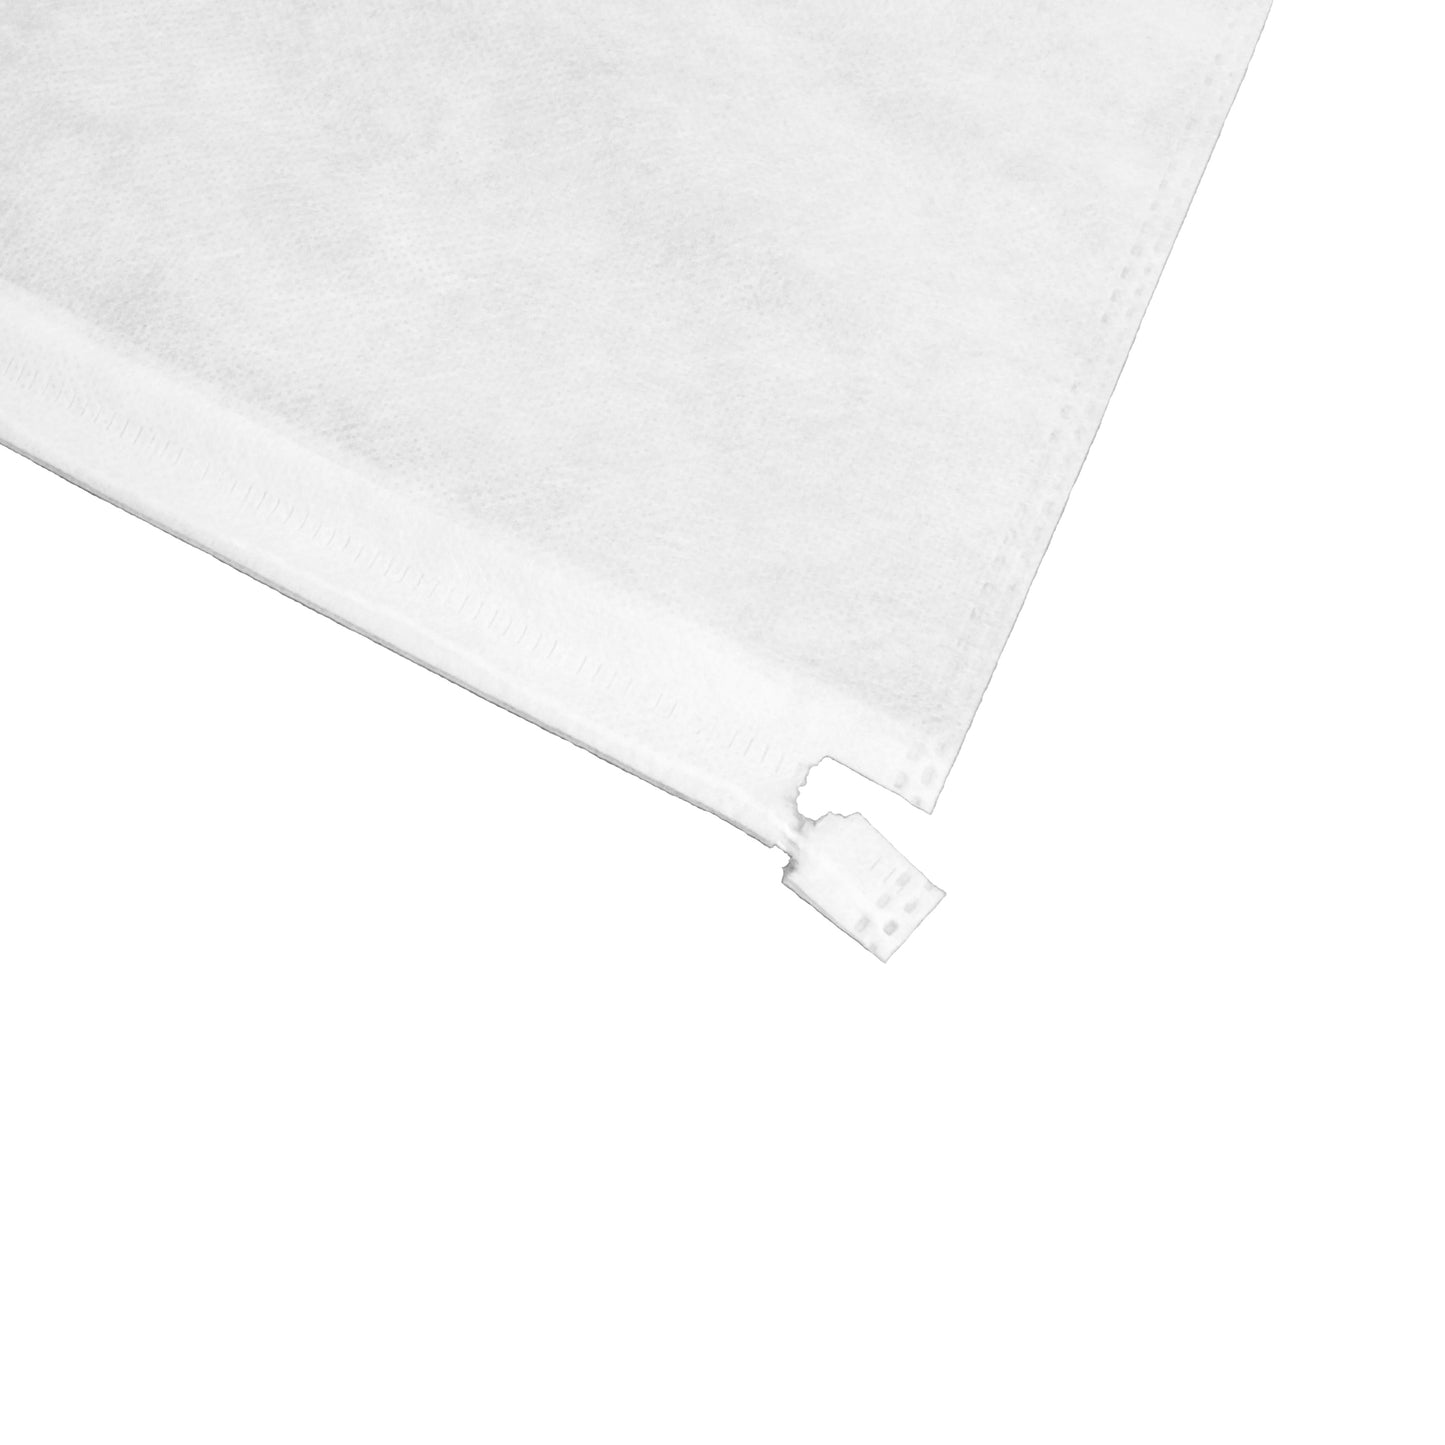 Plant Fiber Mesh Bag / 30 x 20 cm / white color with drawstring closure